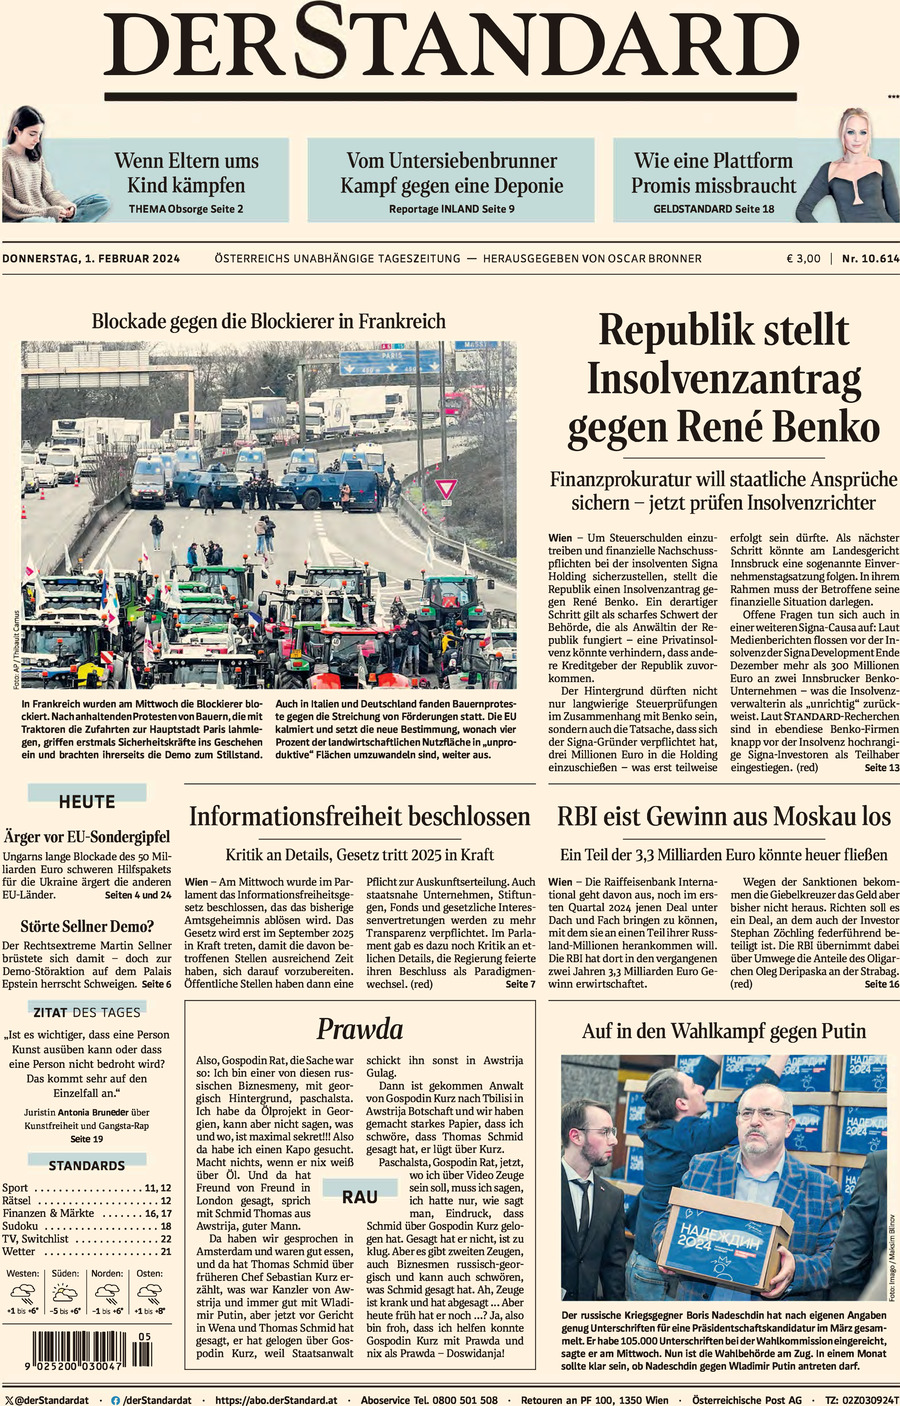 Der Standard - Front Page - 01/02/2024